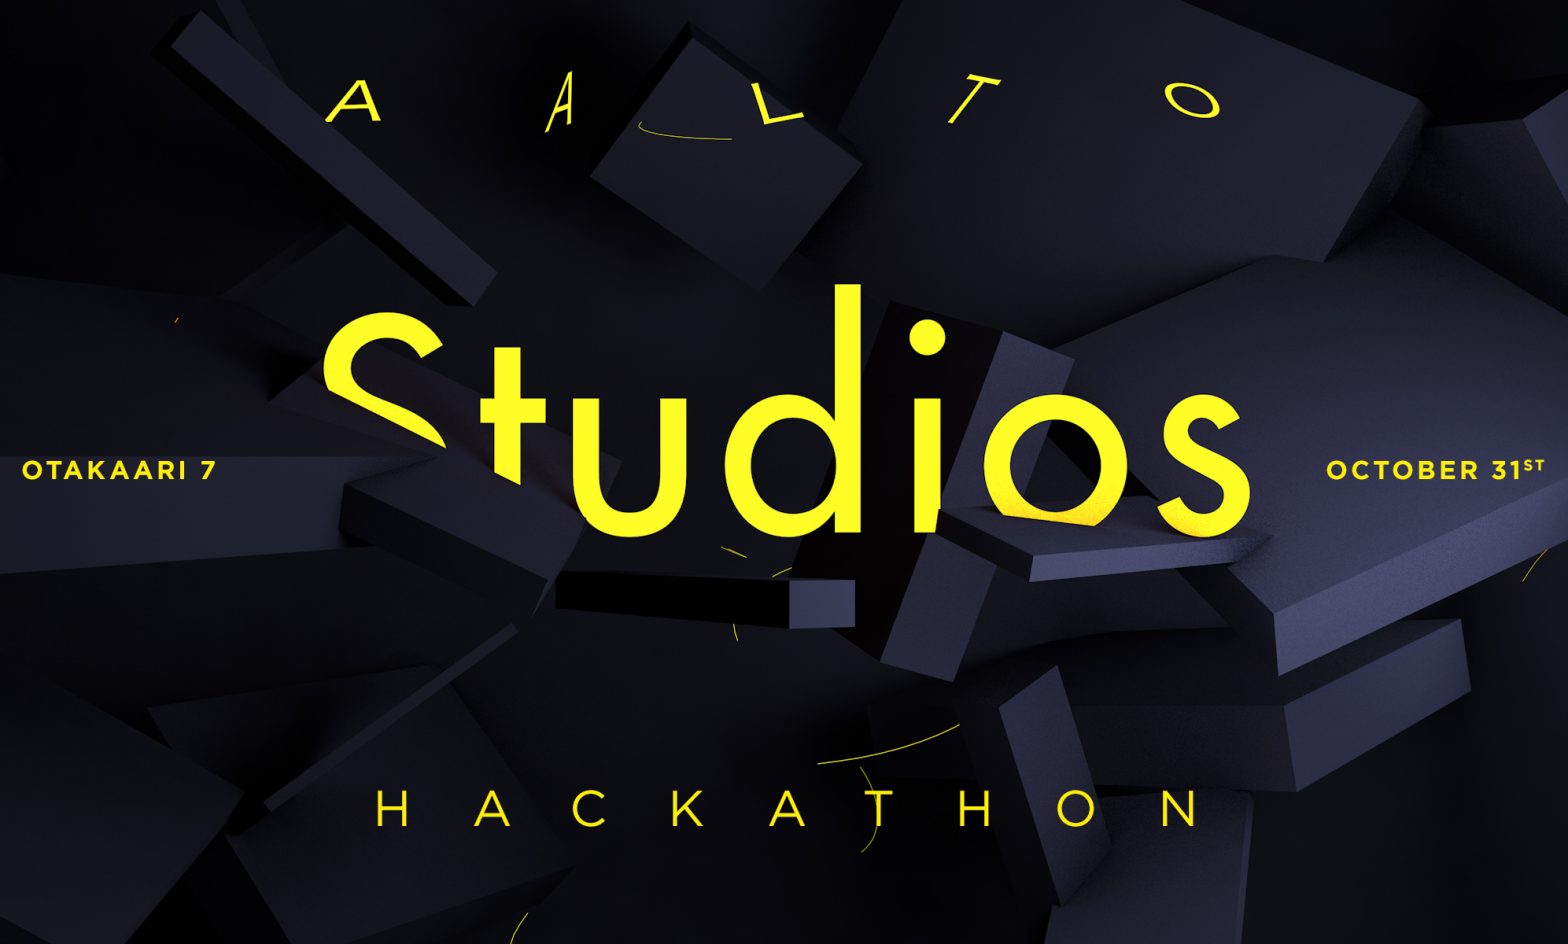 Thank You for the Aalto Studios Hackathon 2017